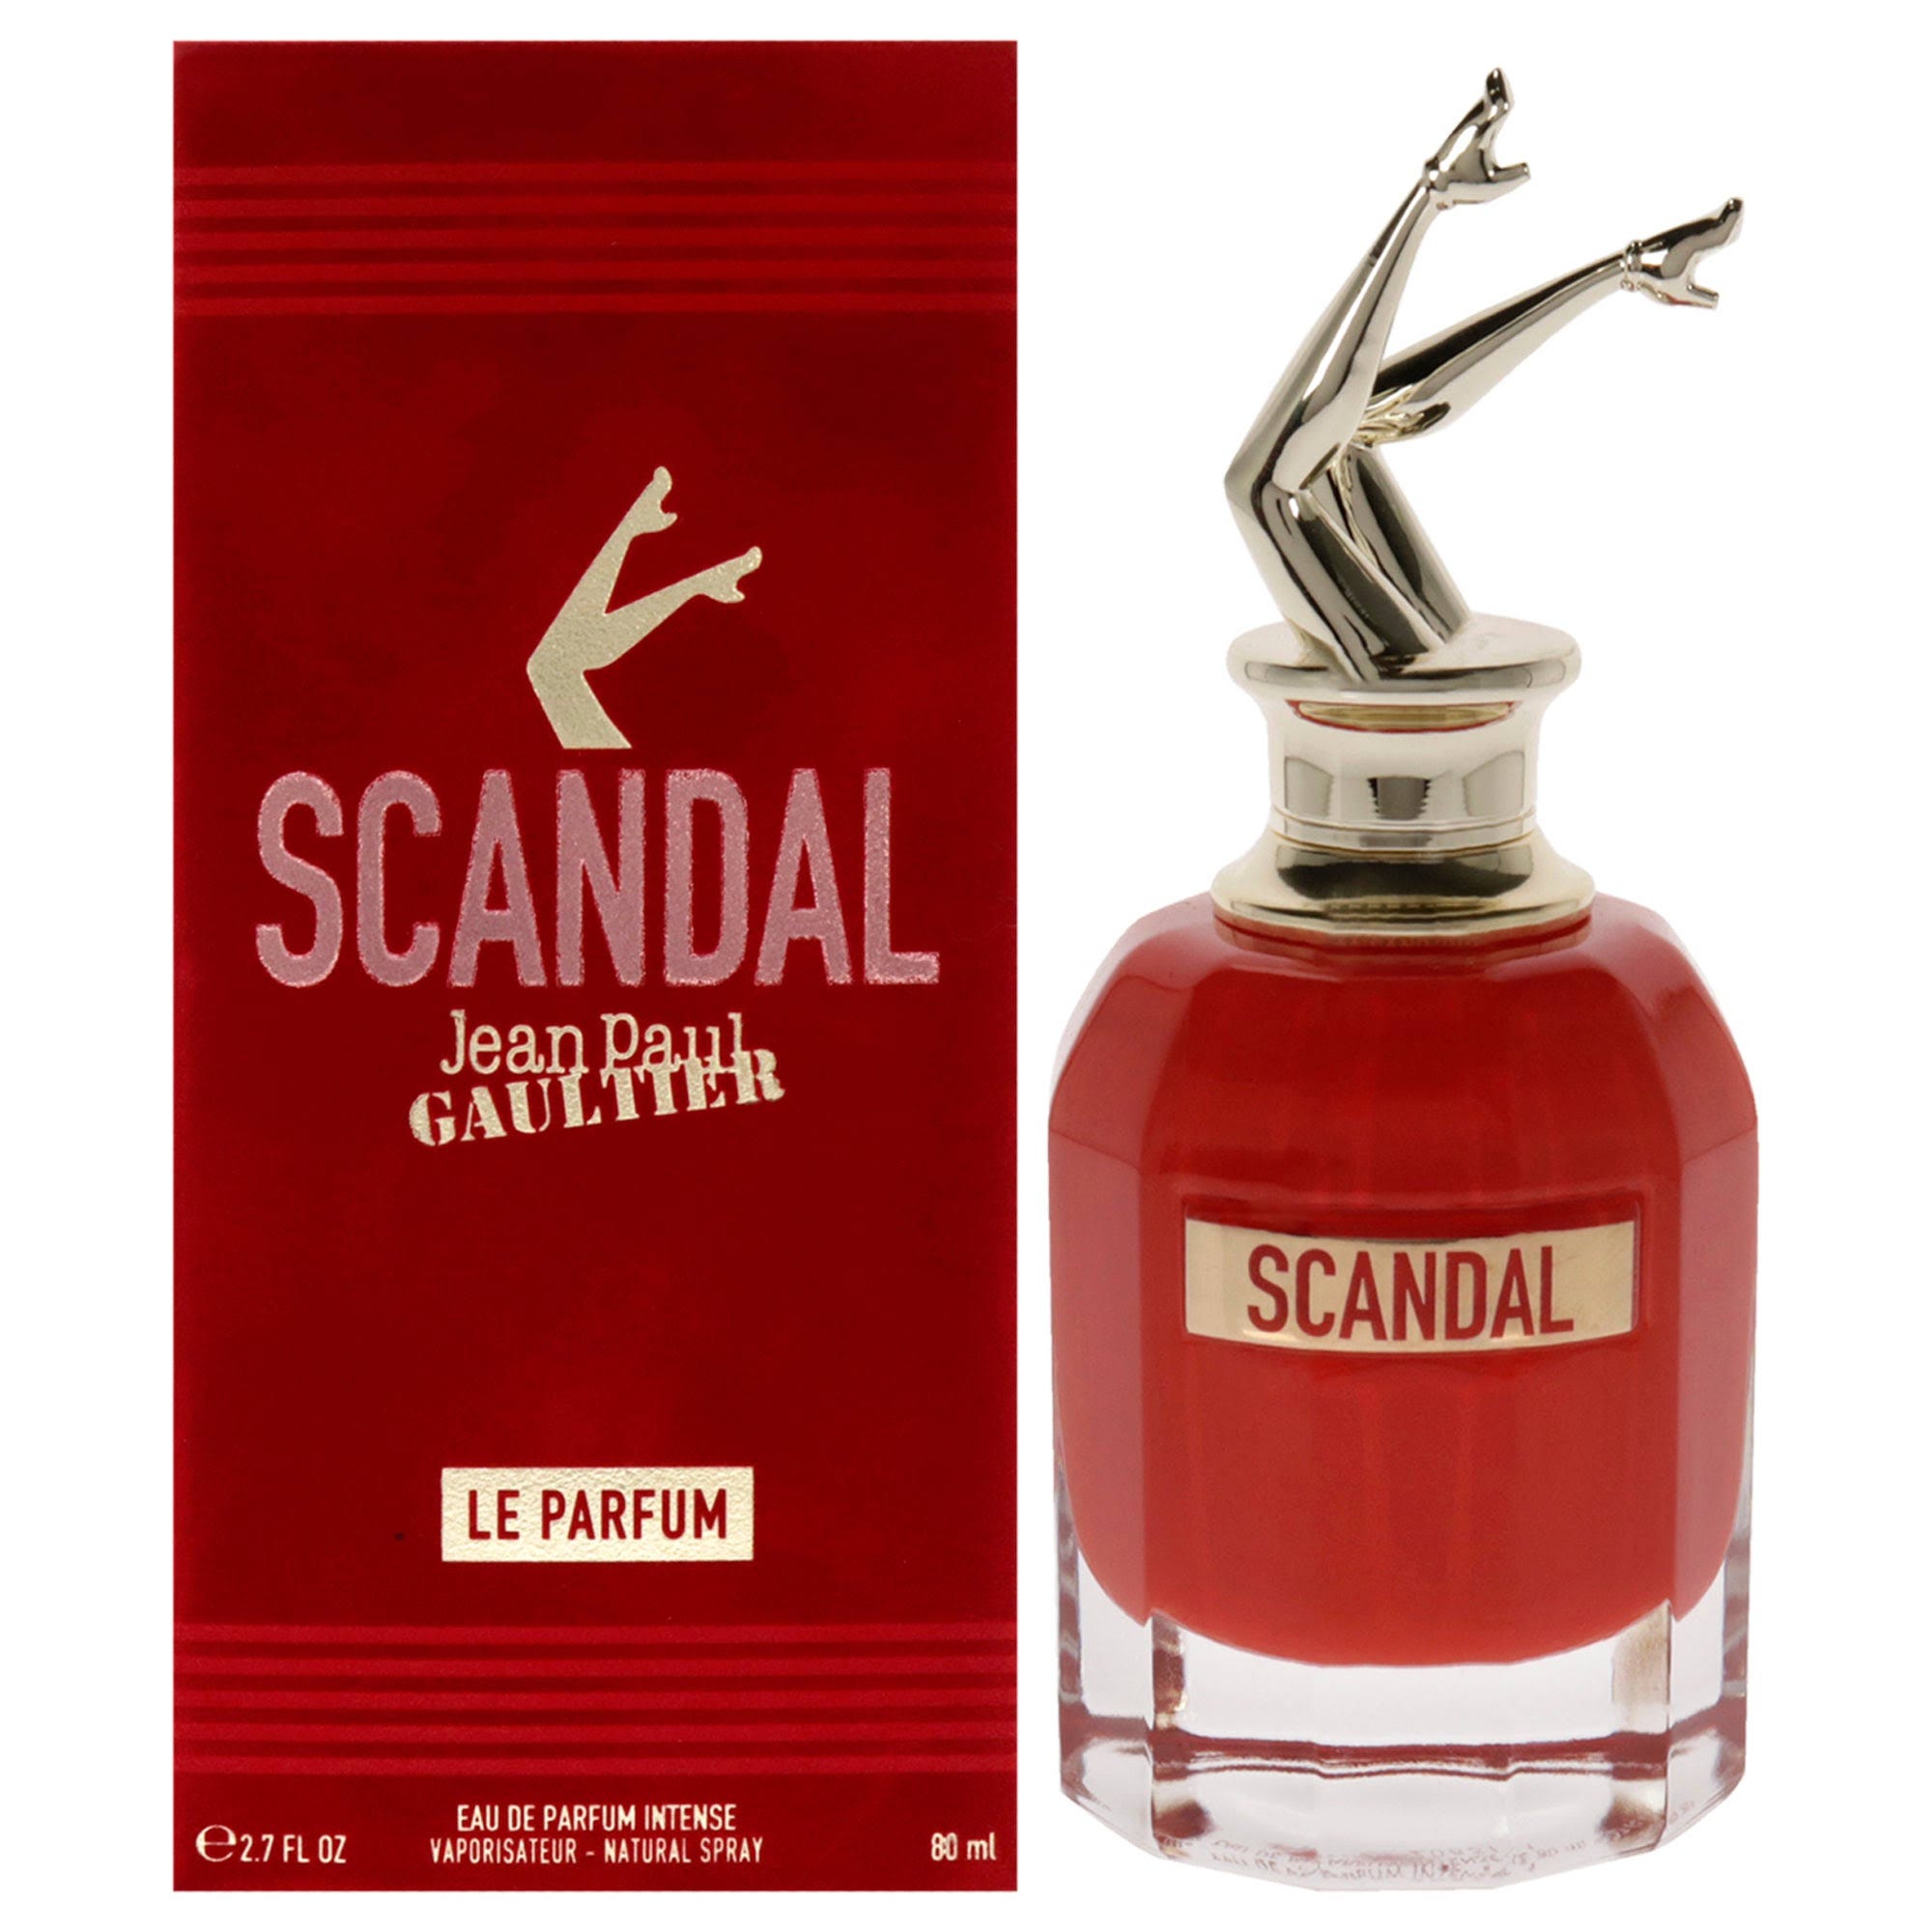 Jean Paul Gaultier Scandal Le Parfum Amber Floral Fragrance for Women | Image